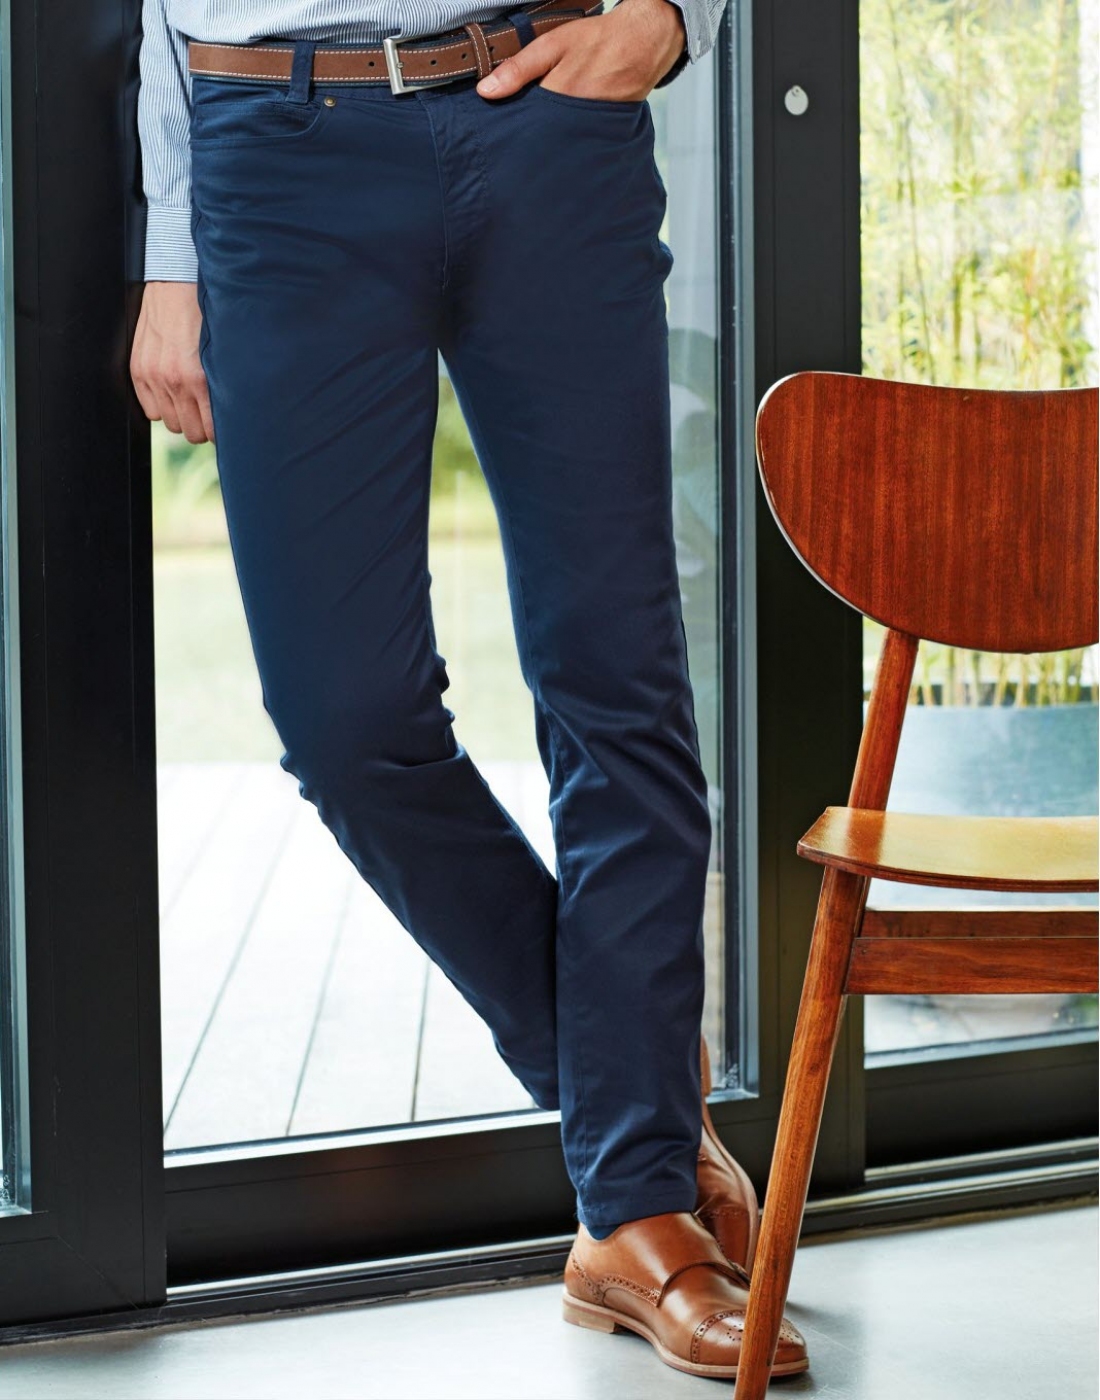 Pantalon ospatar, model chino clasic, tip stretch denim cu 4 buzunare, de barbat